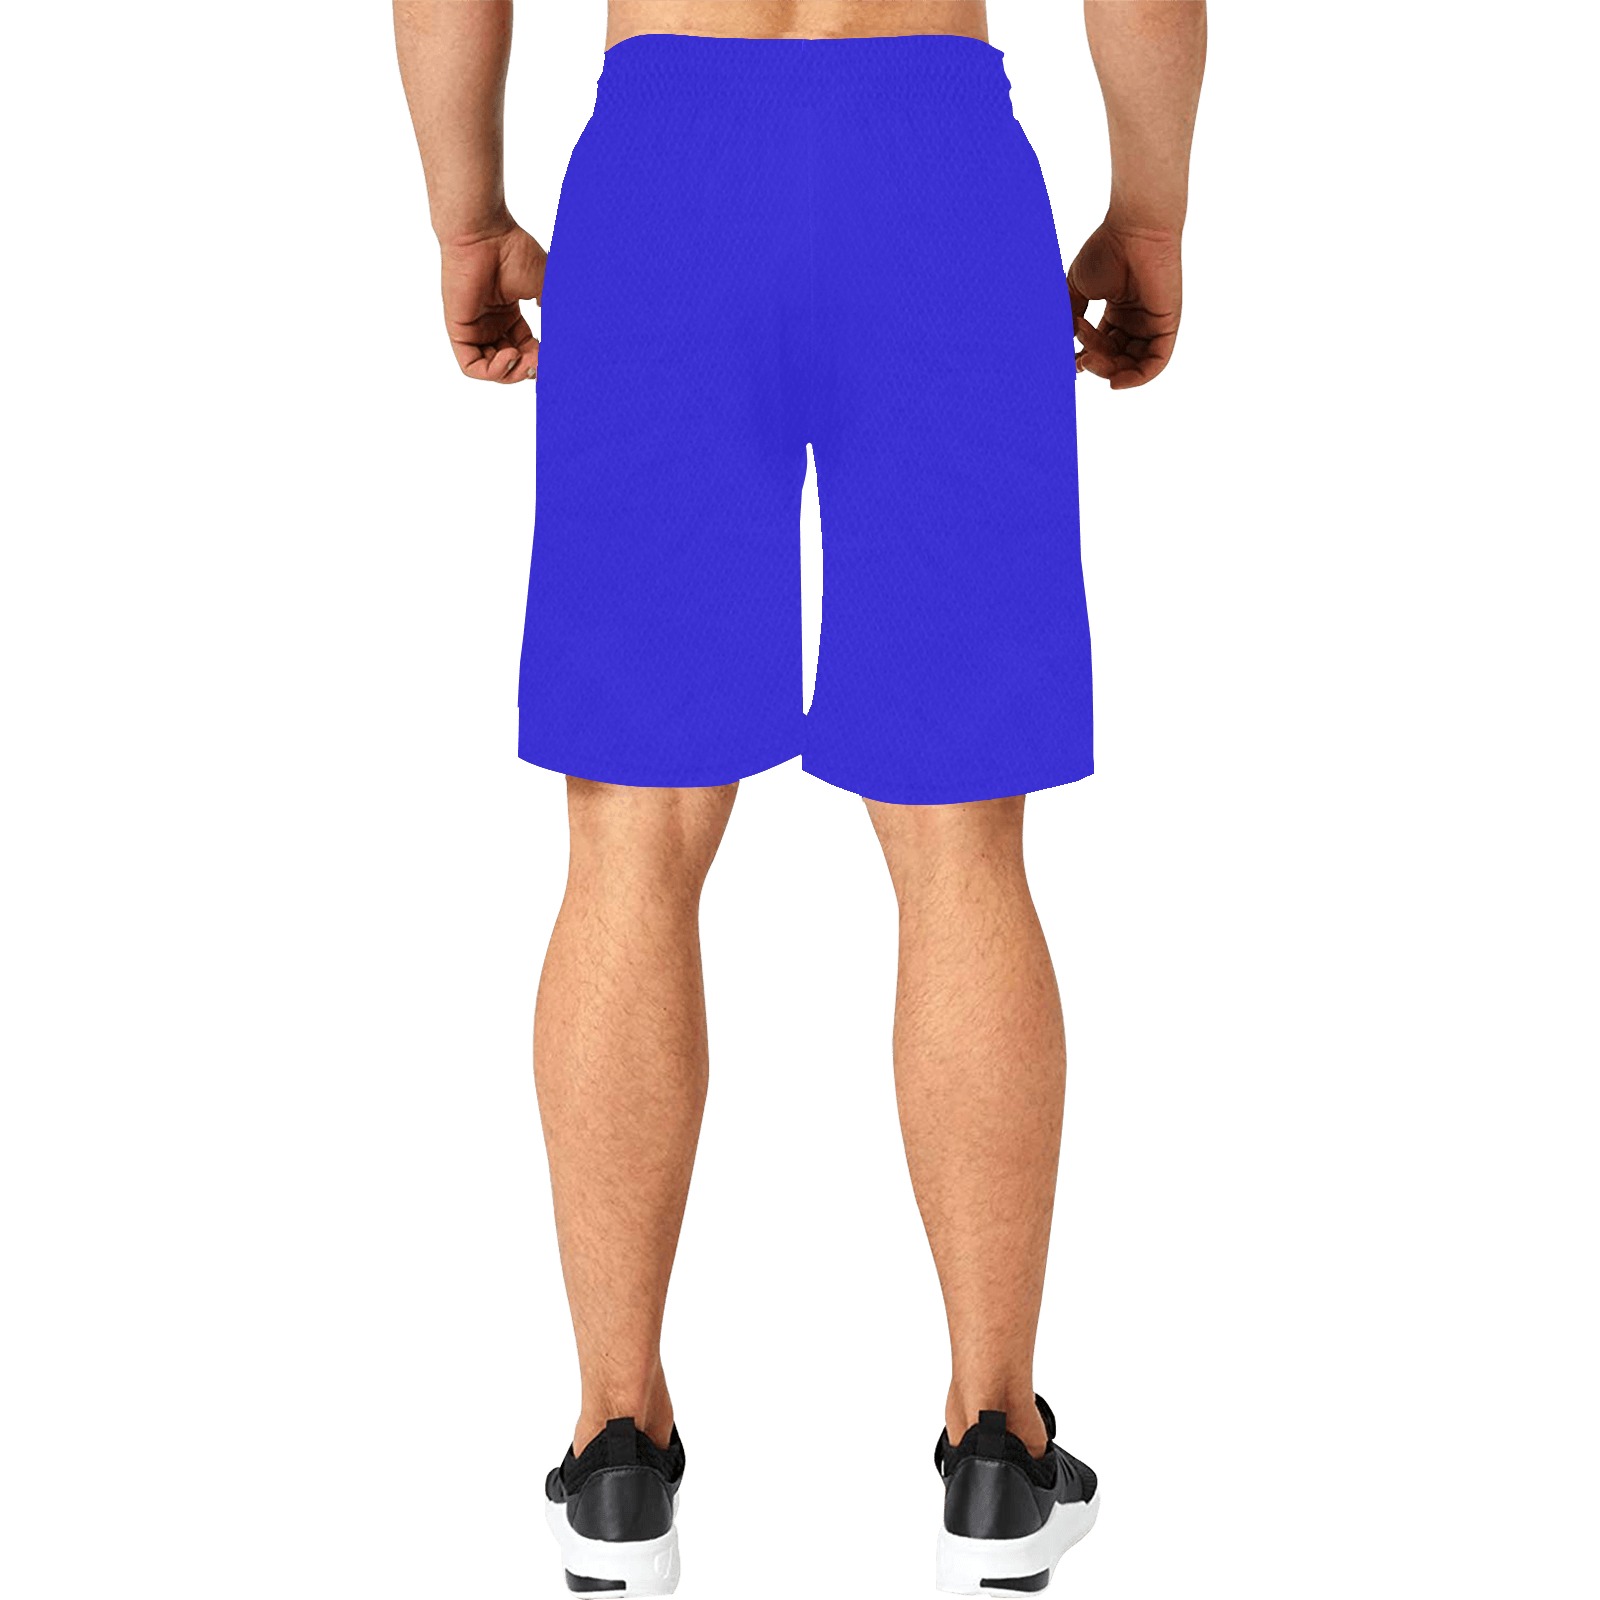 DIONIO Clothing - Blue & Yellow Basketball Shorts (Yellow D-Shield Logo) All Over Print Basketball Shorts